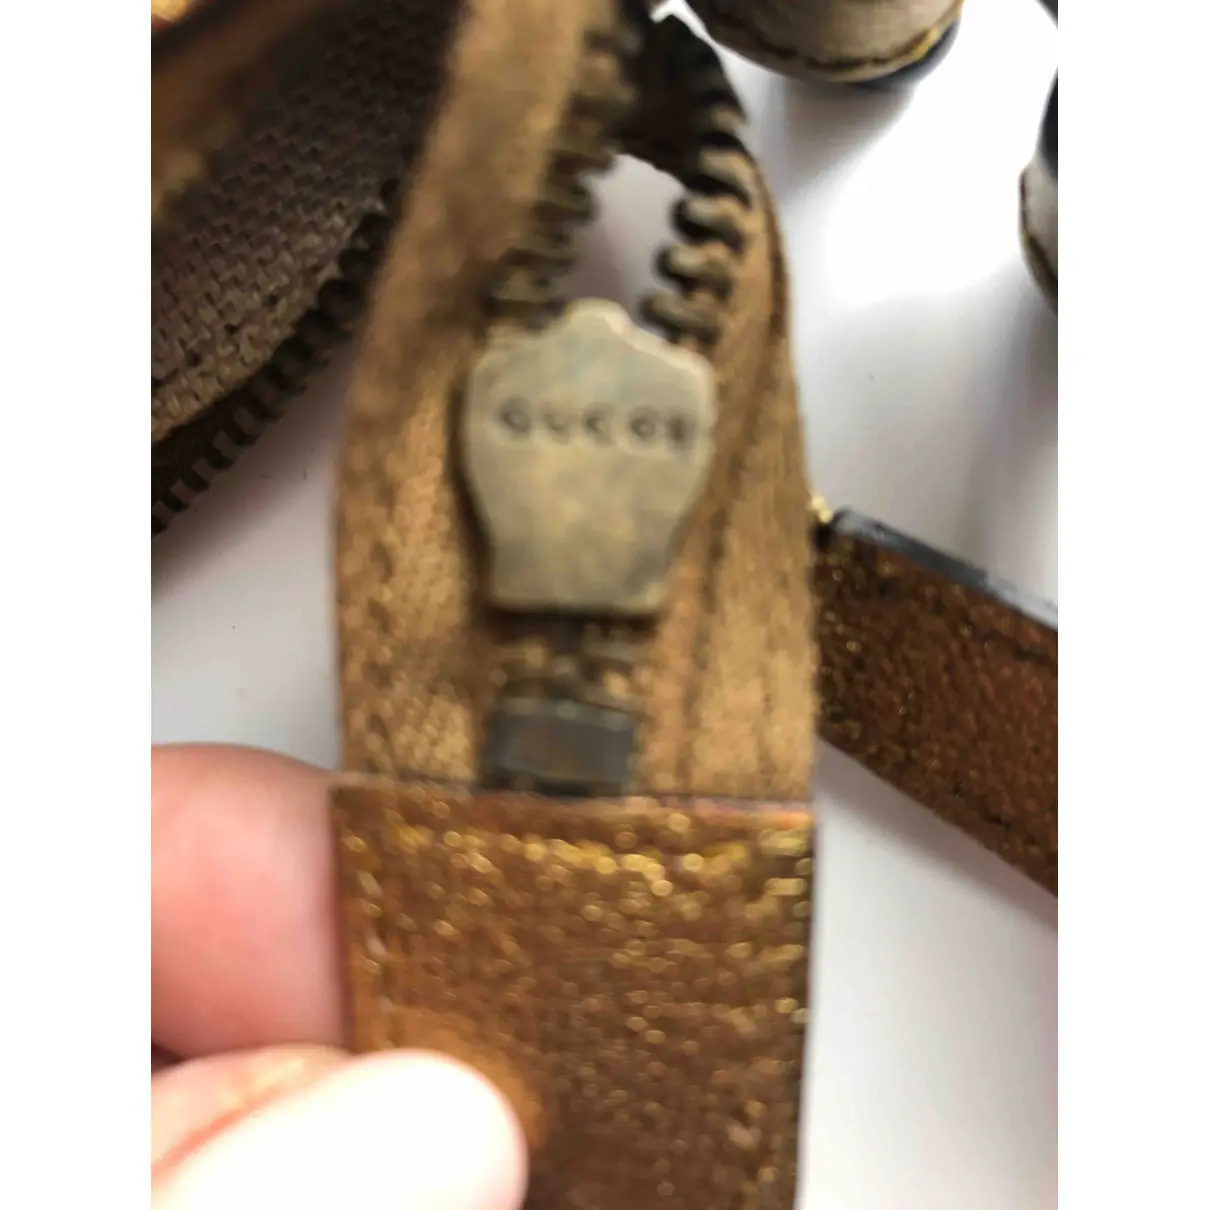 1973 leather handbag Gucci